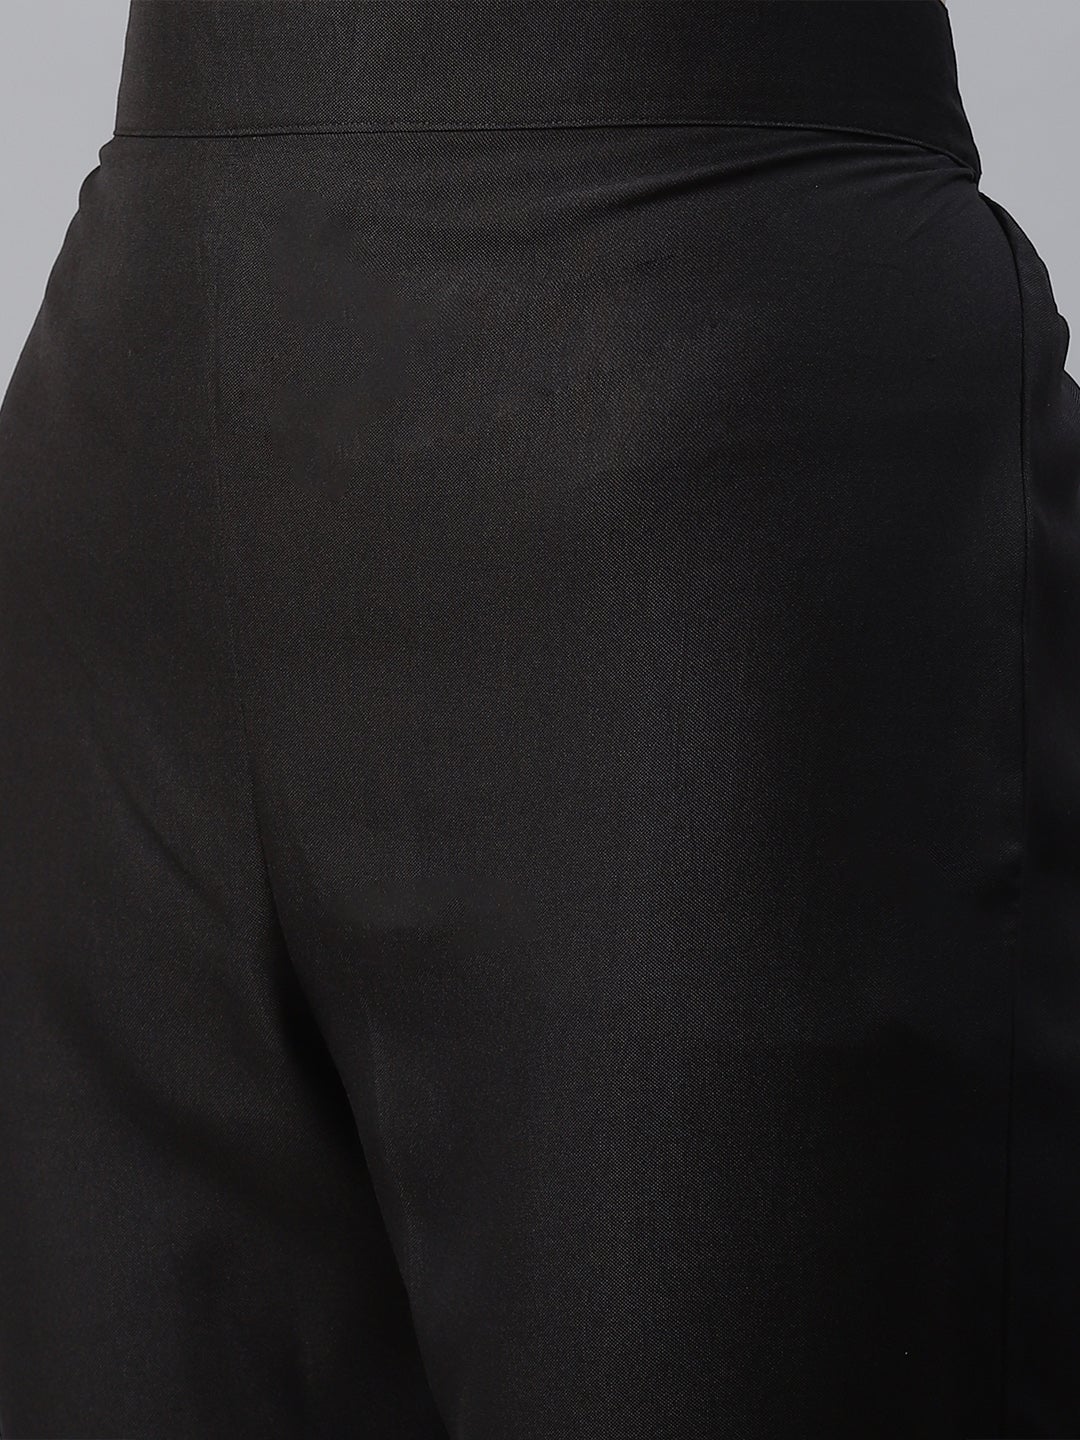 Mindhal Women's Black Color Digital Printed Straight Kurta,Pant And Dupatta Set